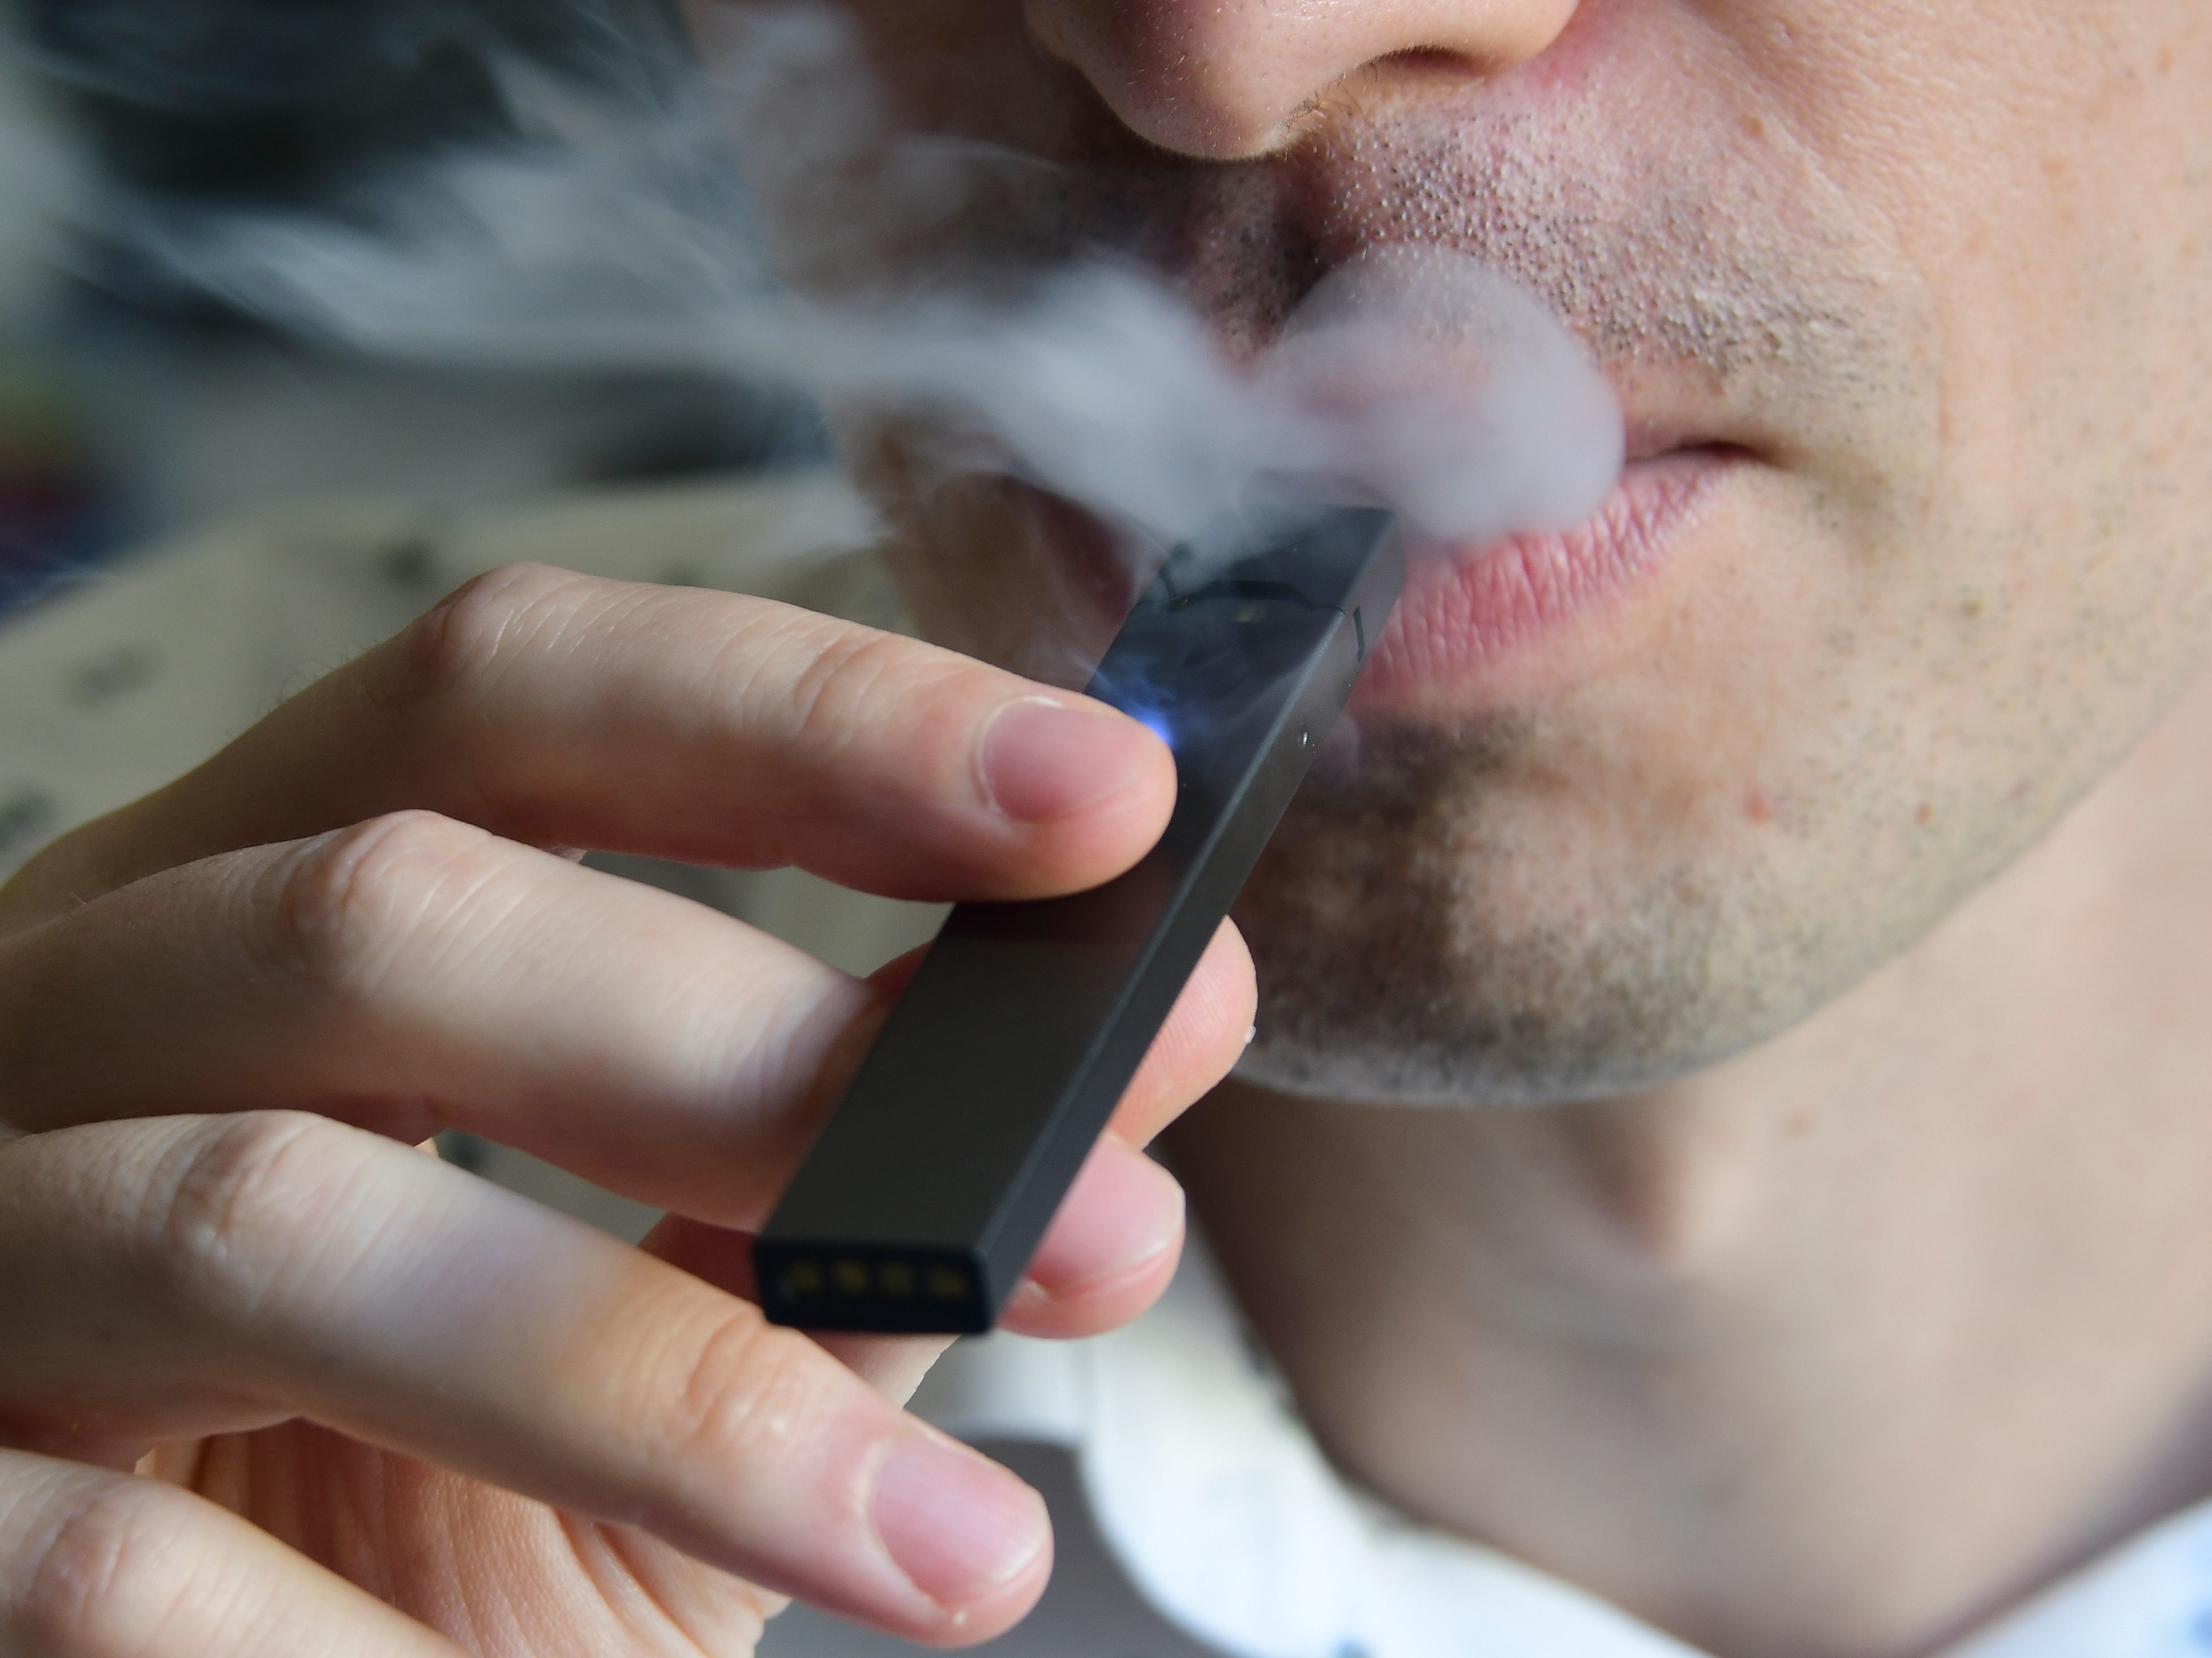 North Carolina AG sues e-cigarette maker Juul, says it downplayed dangers